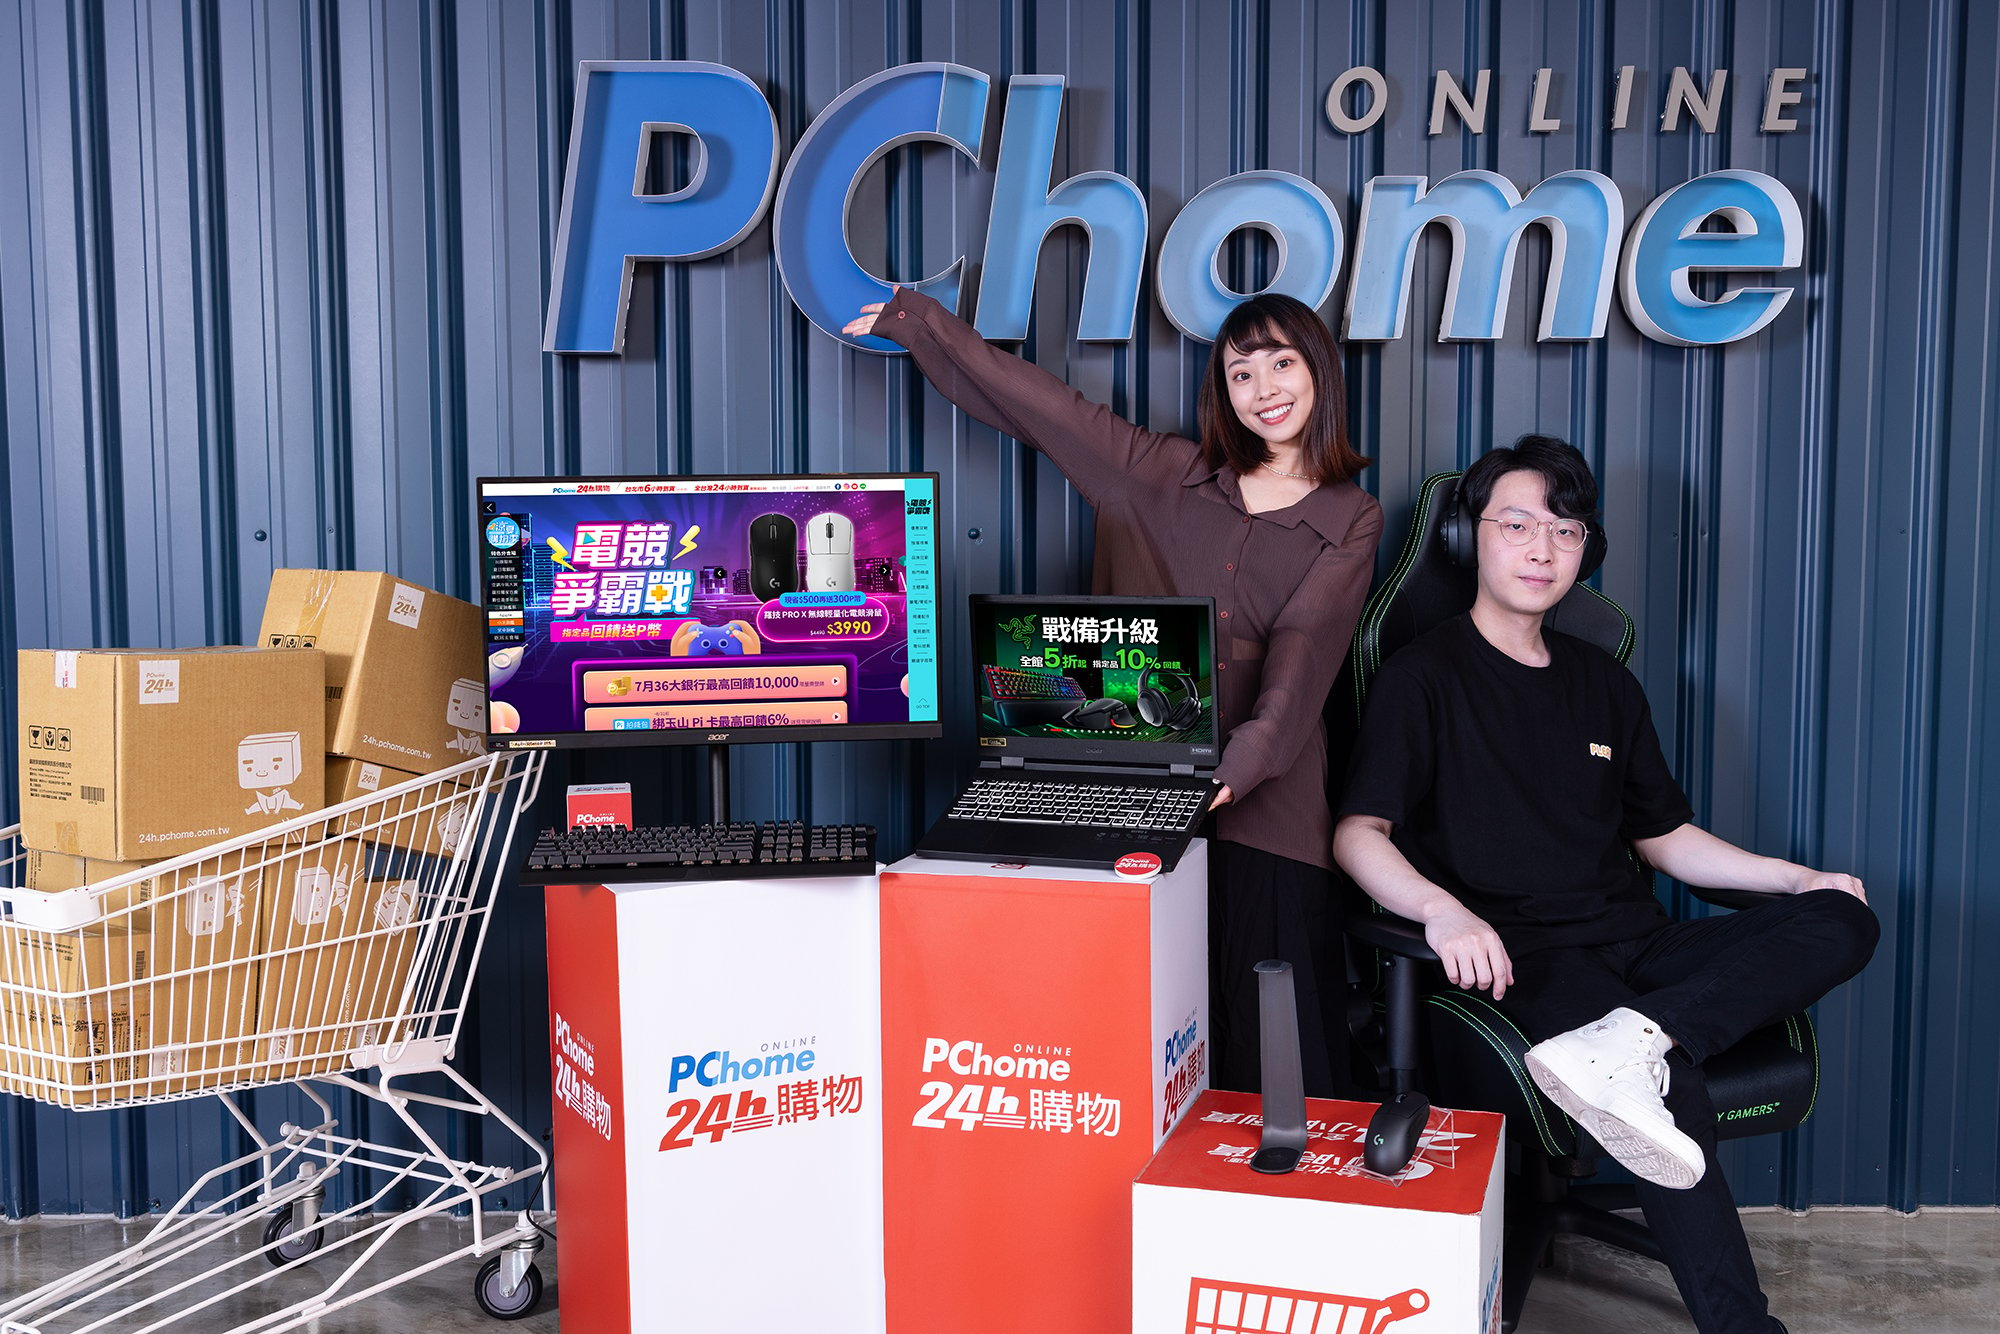 PChome 24h 購物「電競爭霸戰」火熱登場　購買指定商品最高 10% P 幣回饋 @3C 達人廖阿輝